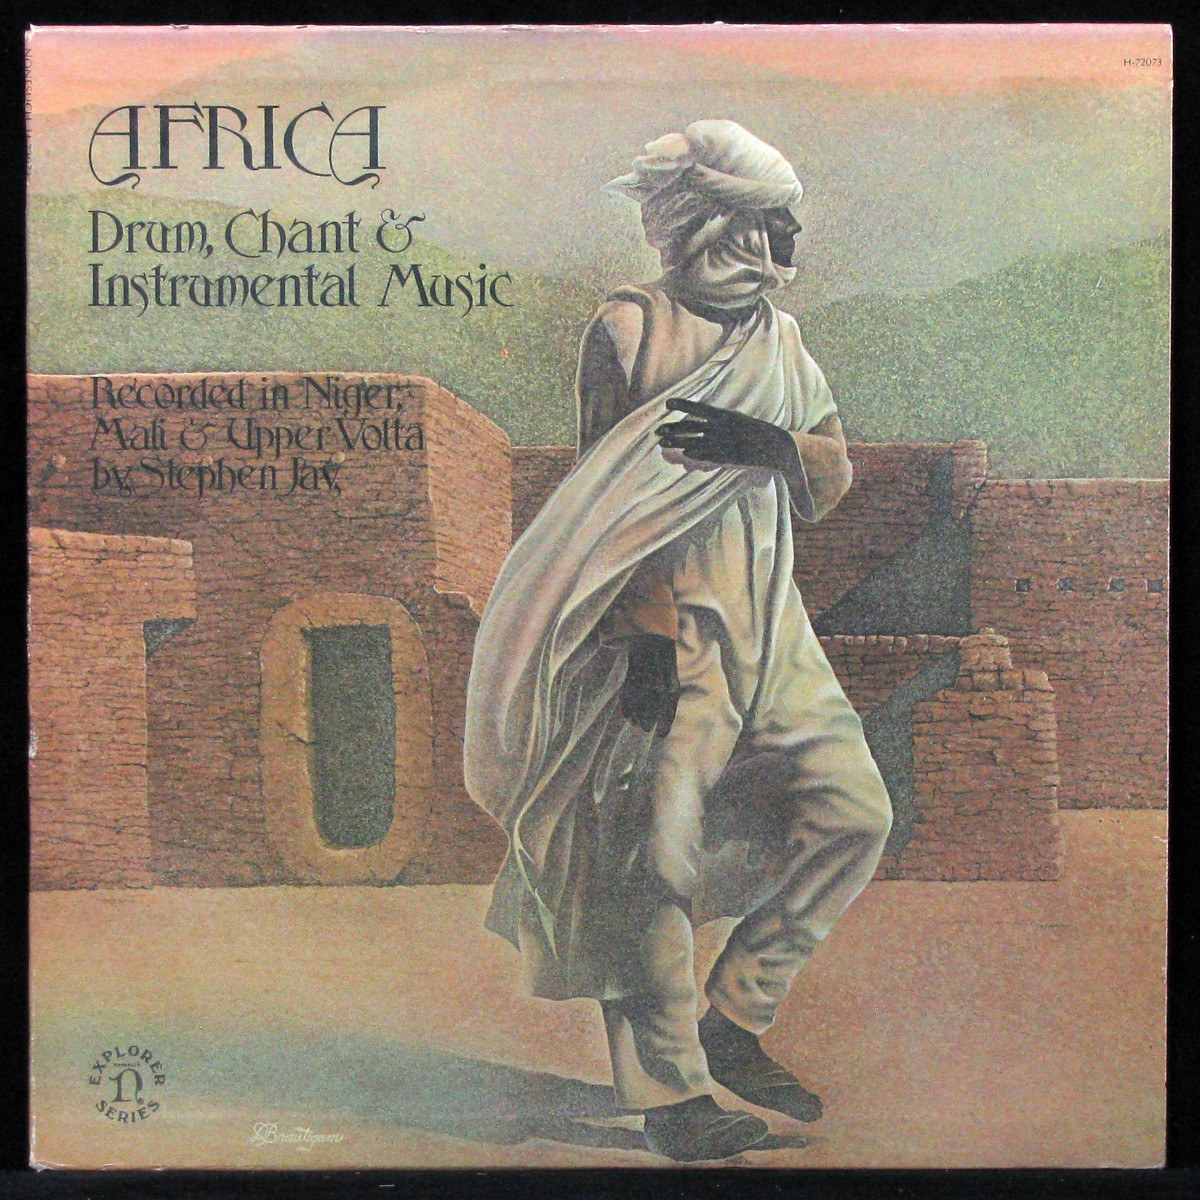 LP Stephen Jay — Africa - Drum, Chant & Instrumental Music фото